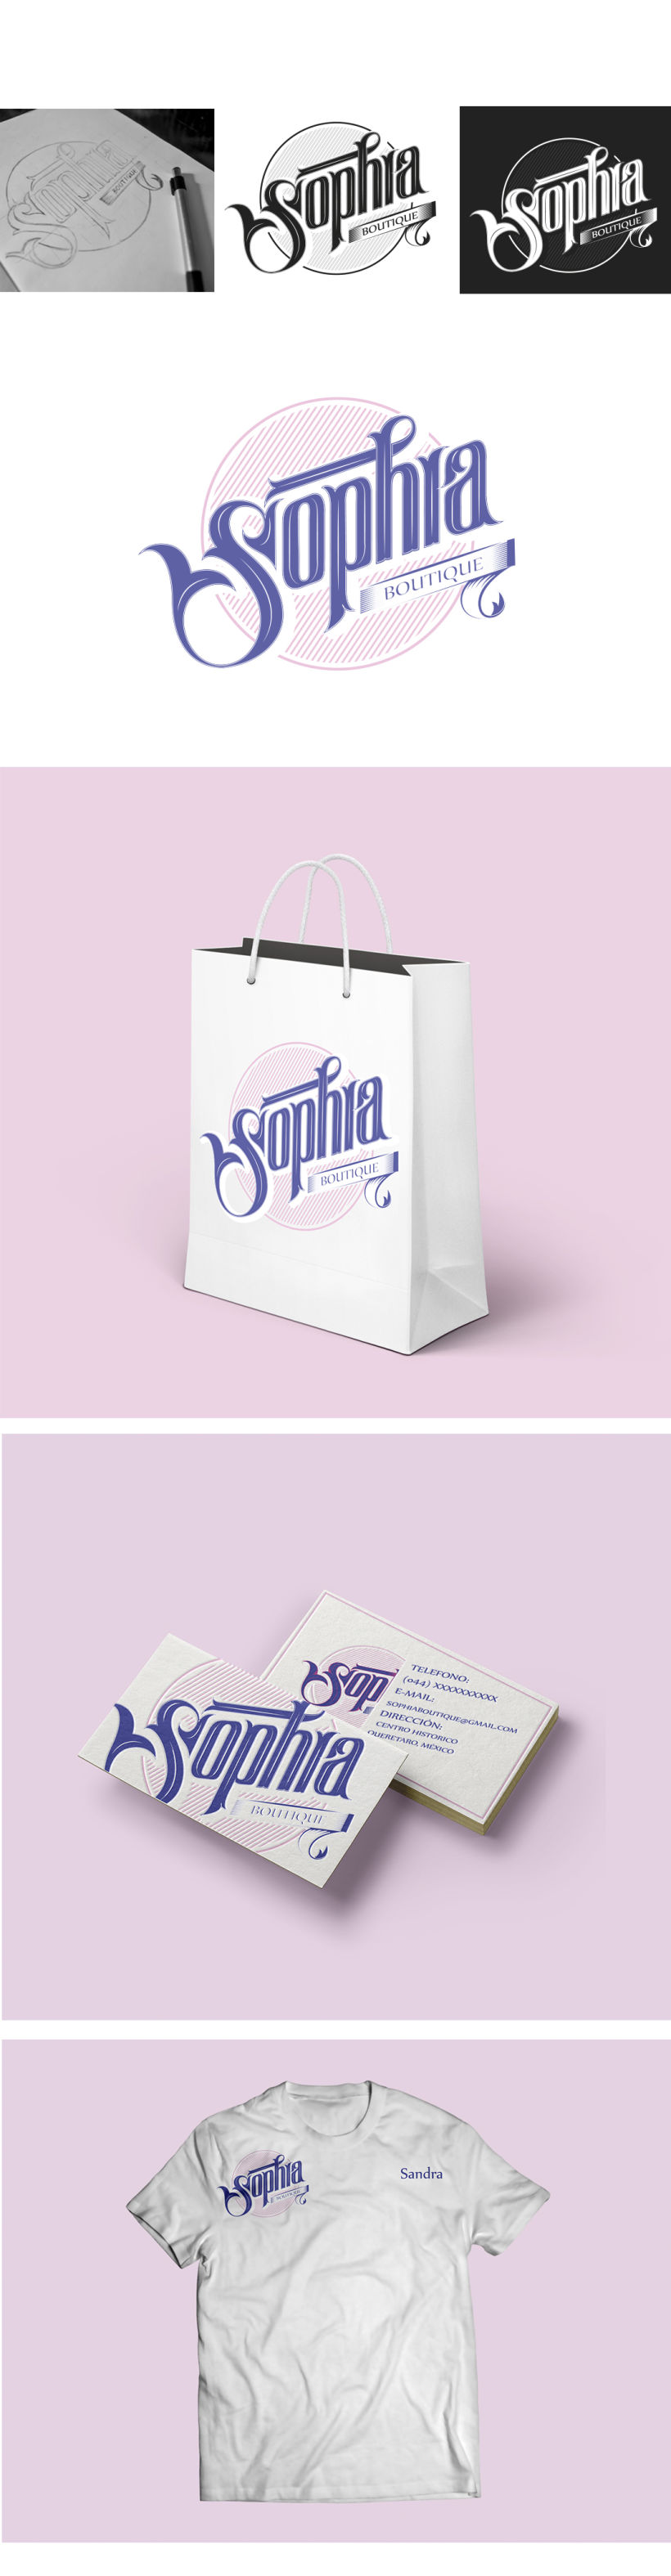 Identidad Sophia boutique -1